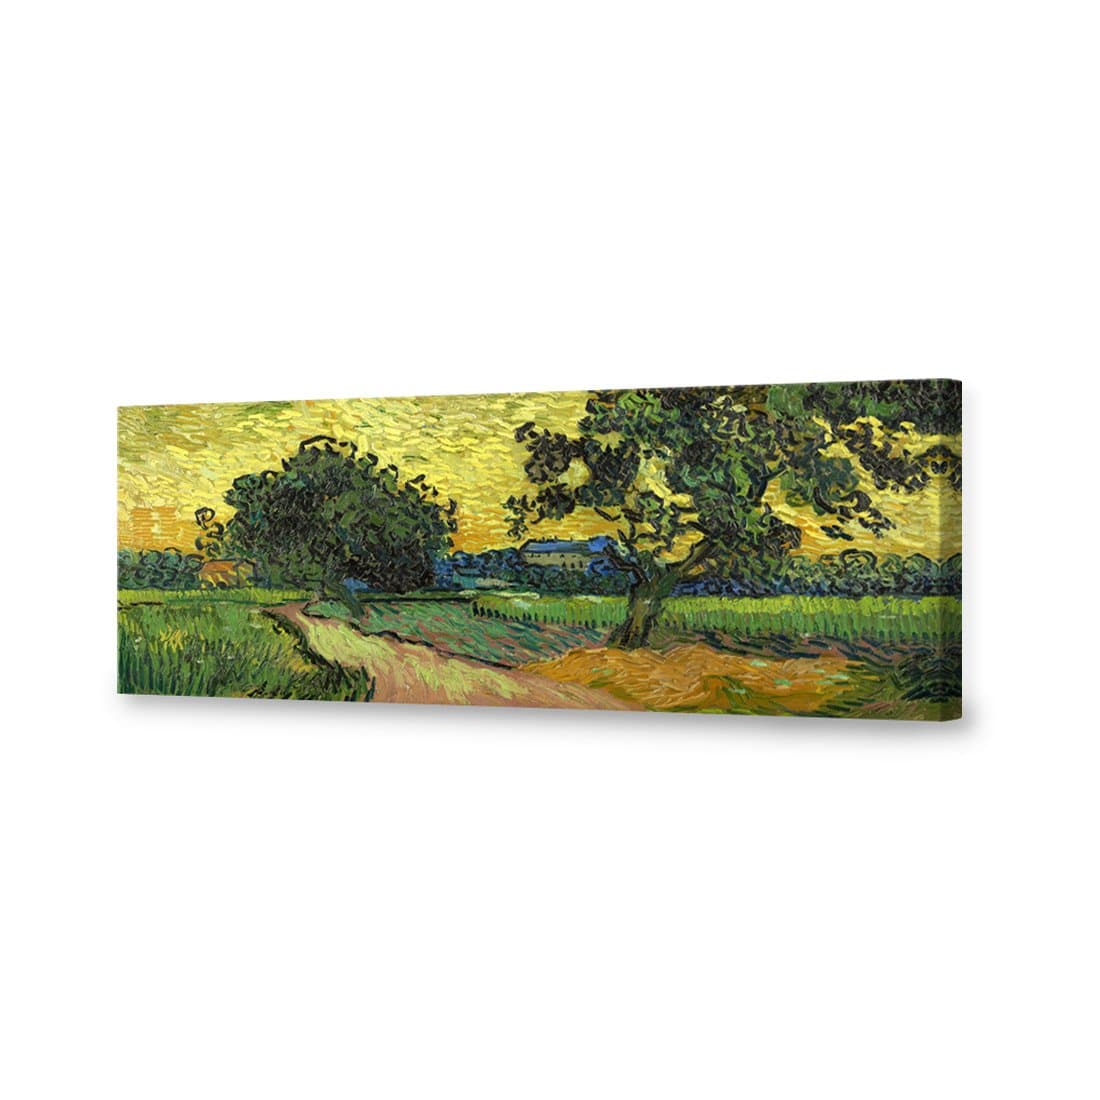 Landscape At Twilight - Van Gogh Canvas Art-Canvas-Wall Art Designs-60x20cm-Canvas - No Frame-Wall Art Designs